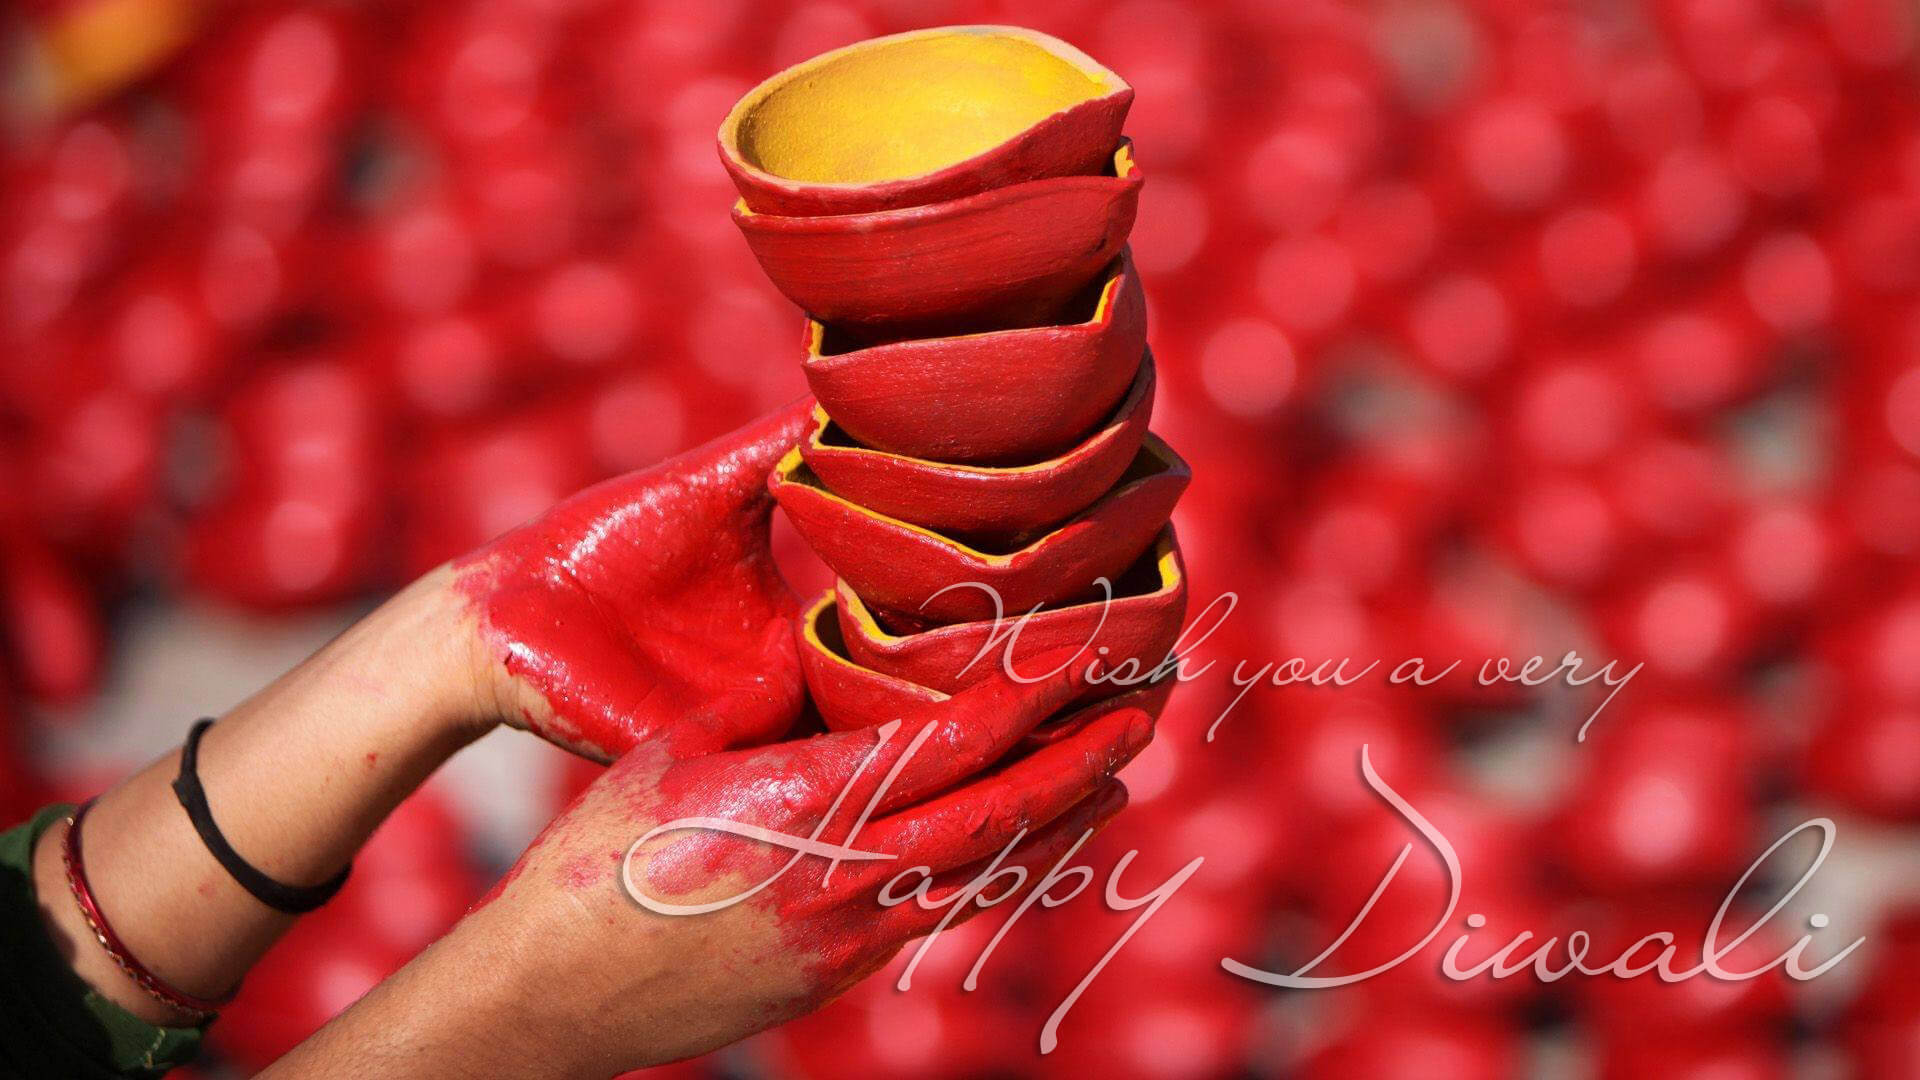 Download-Happy-Diwali-2015-HD-Wallpapers-facebook-mobile-desktop-cgfrog-6